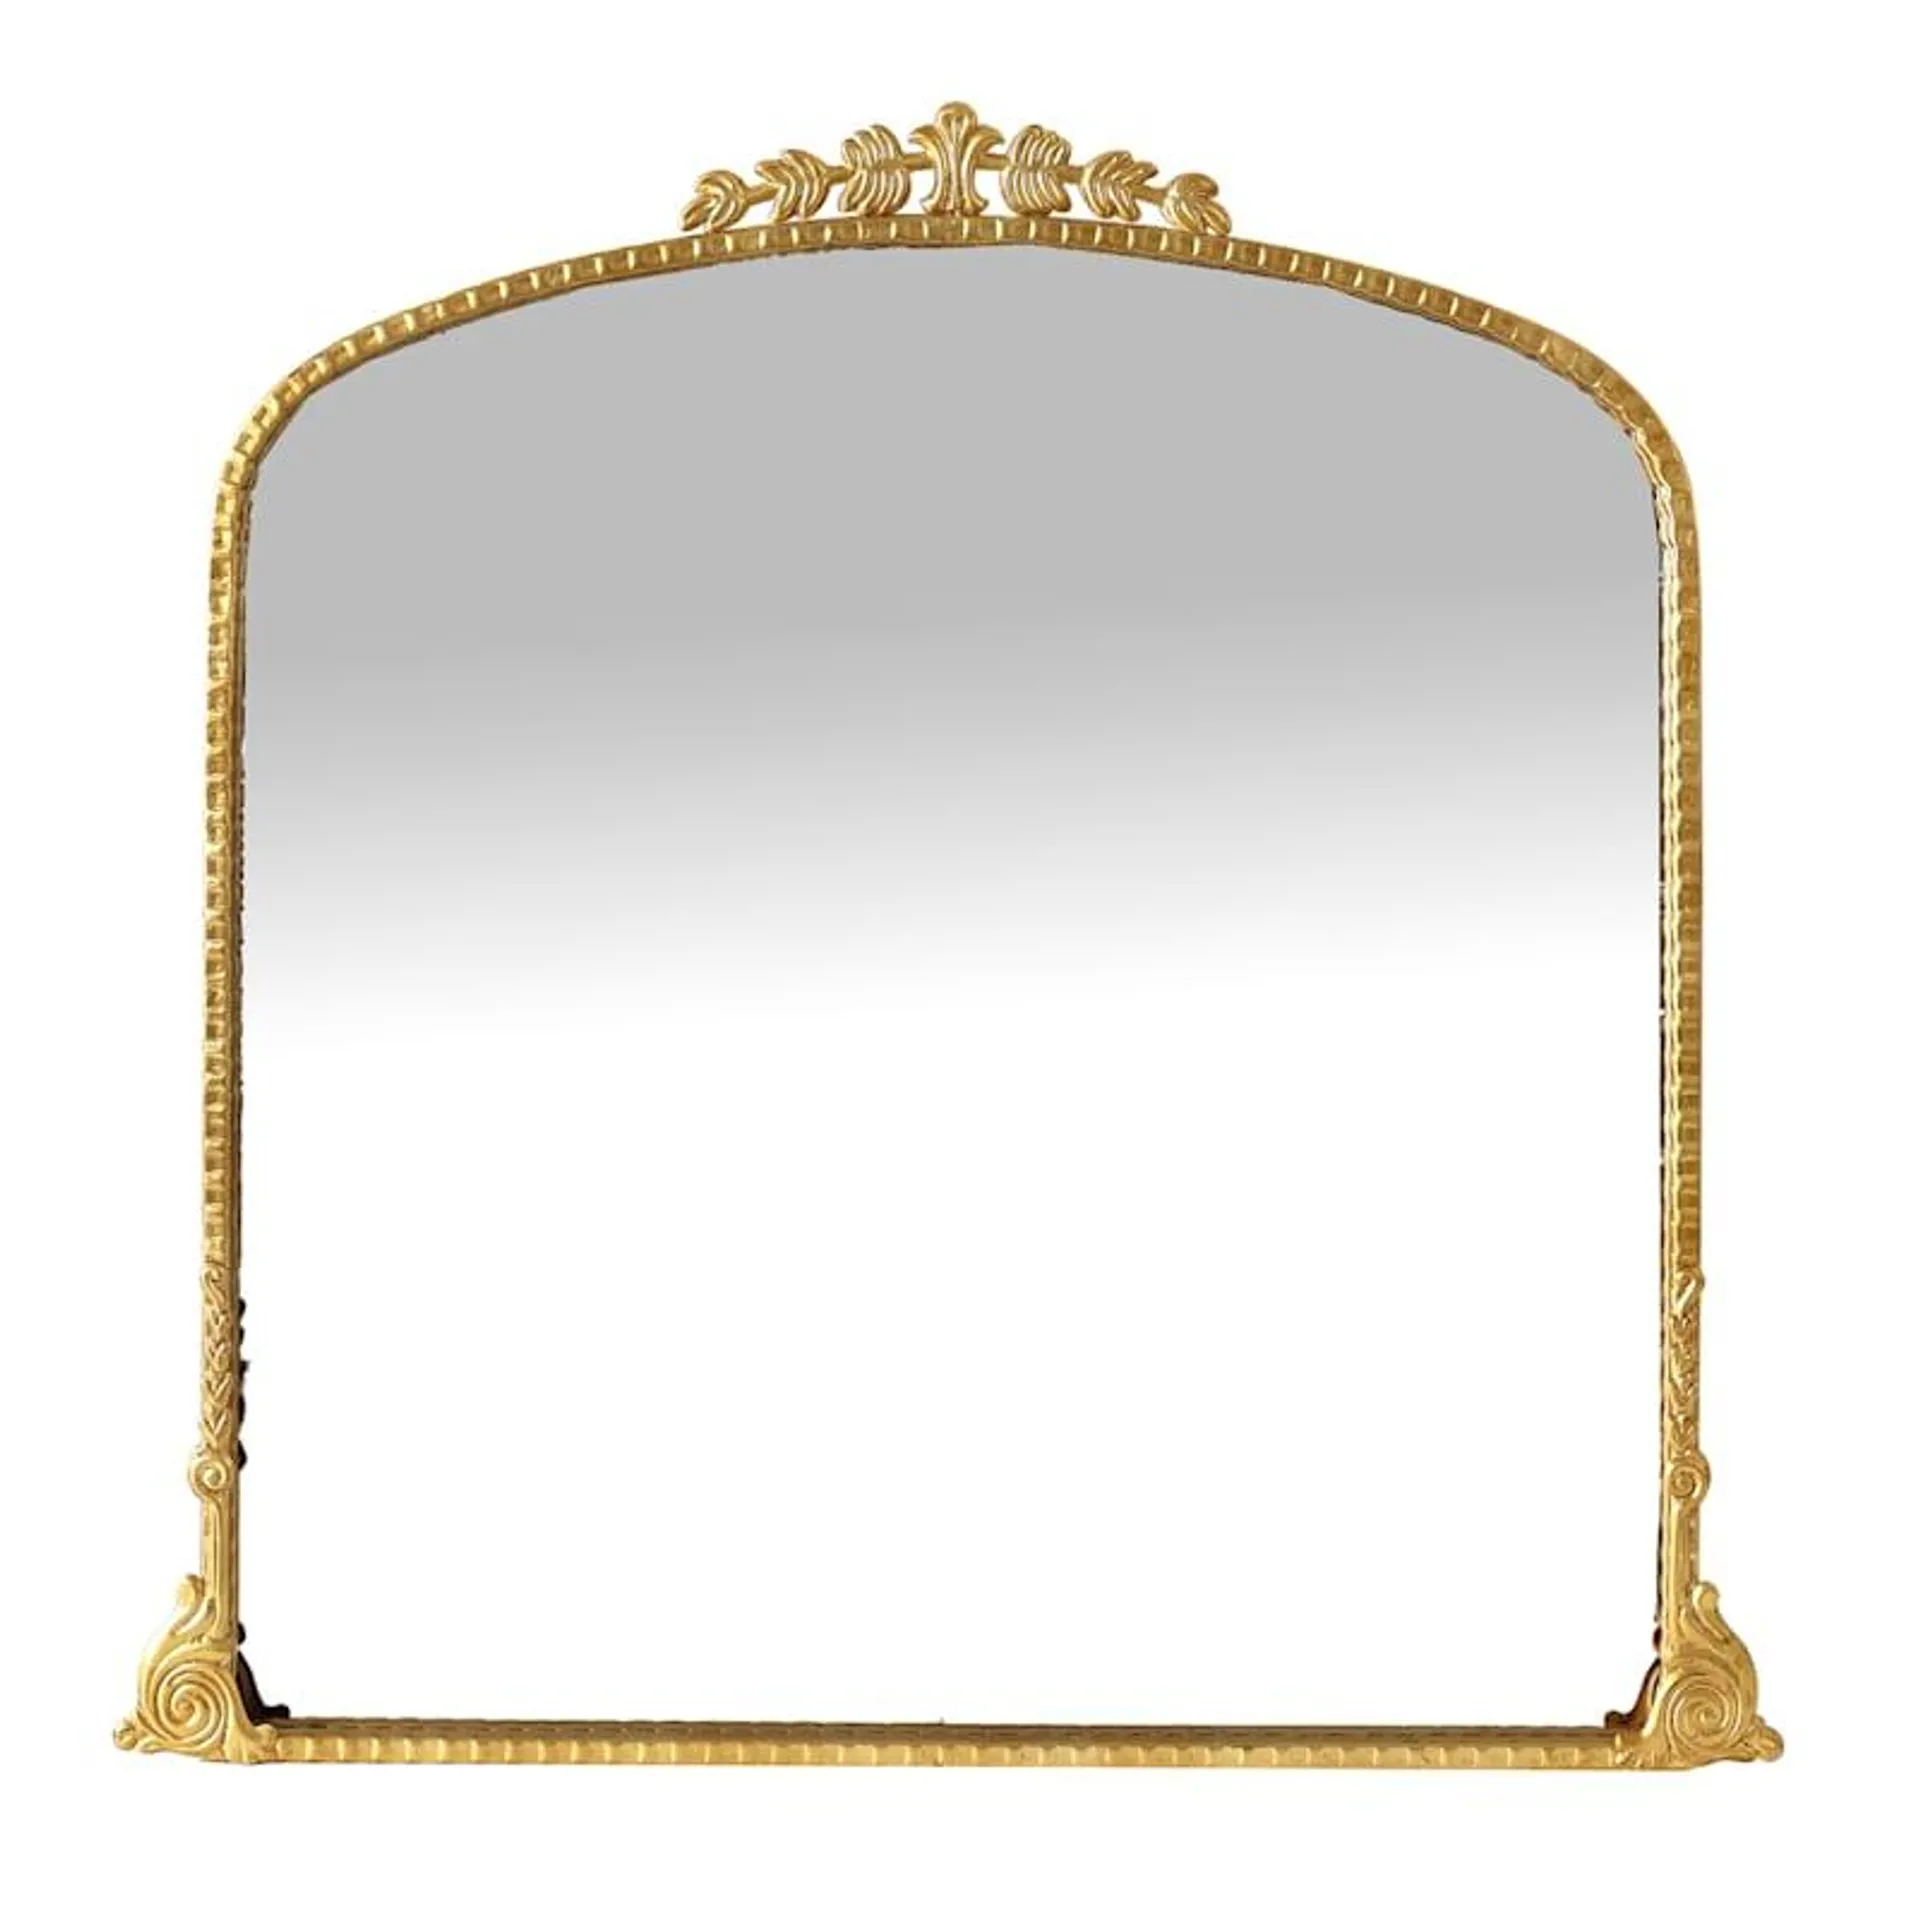 Ornate Gold Metal Wall Mirror, 39x39